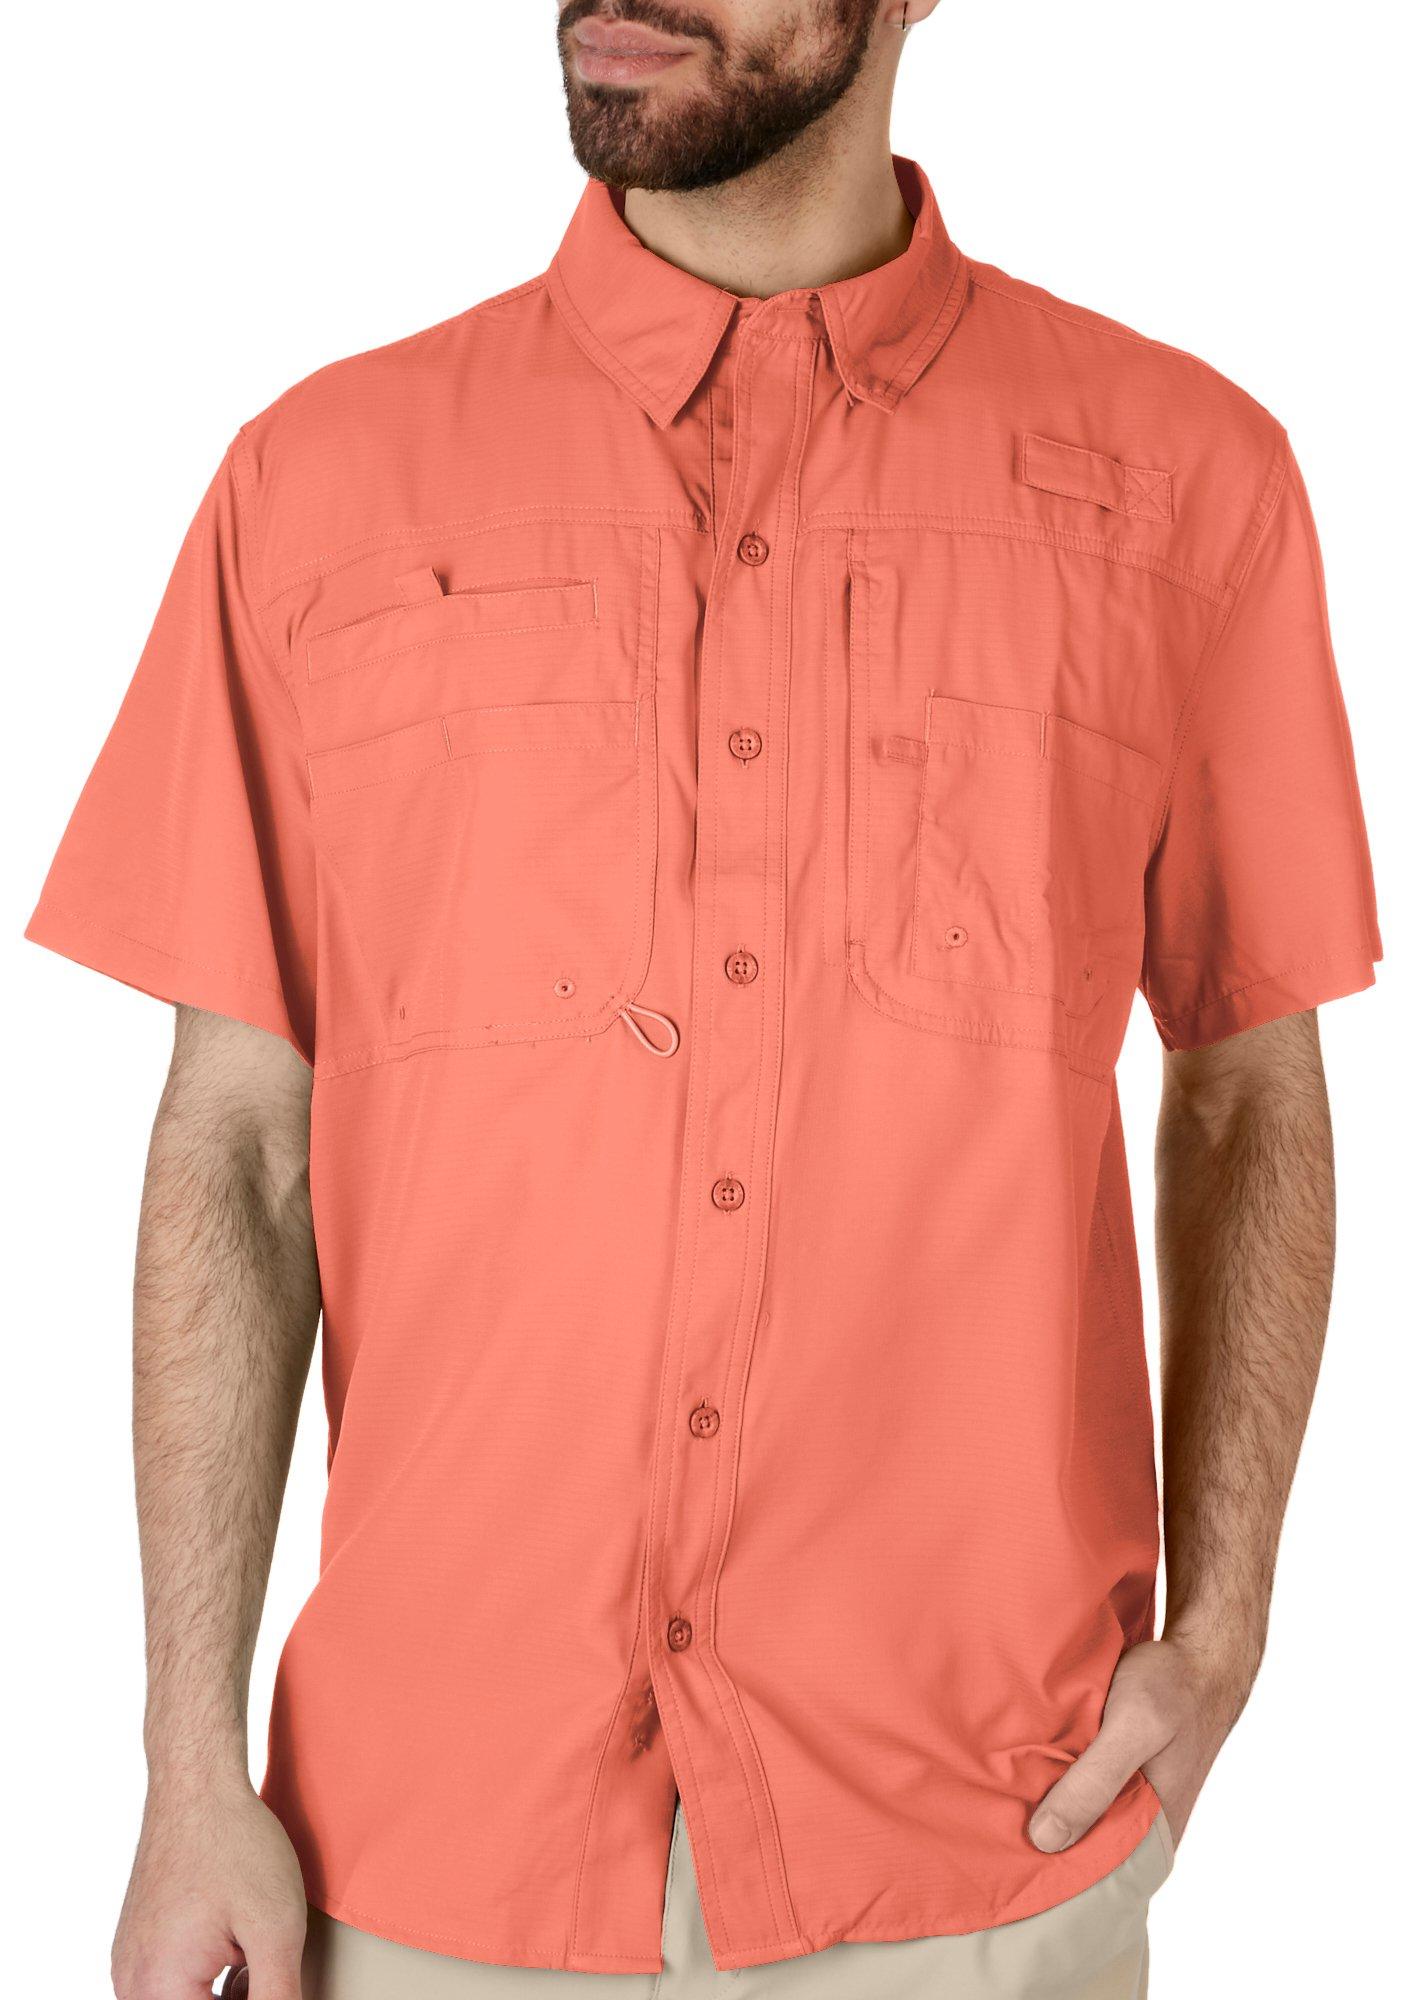 Reel Legends Mens Solid Saltwater II Short Sleeve Shirt - Coral - Medium